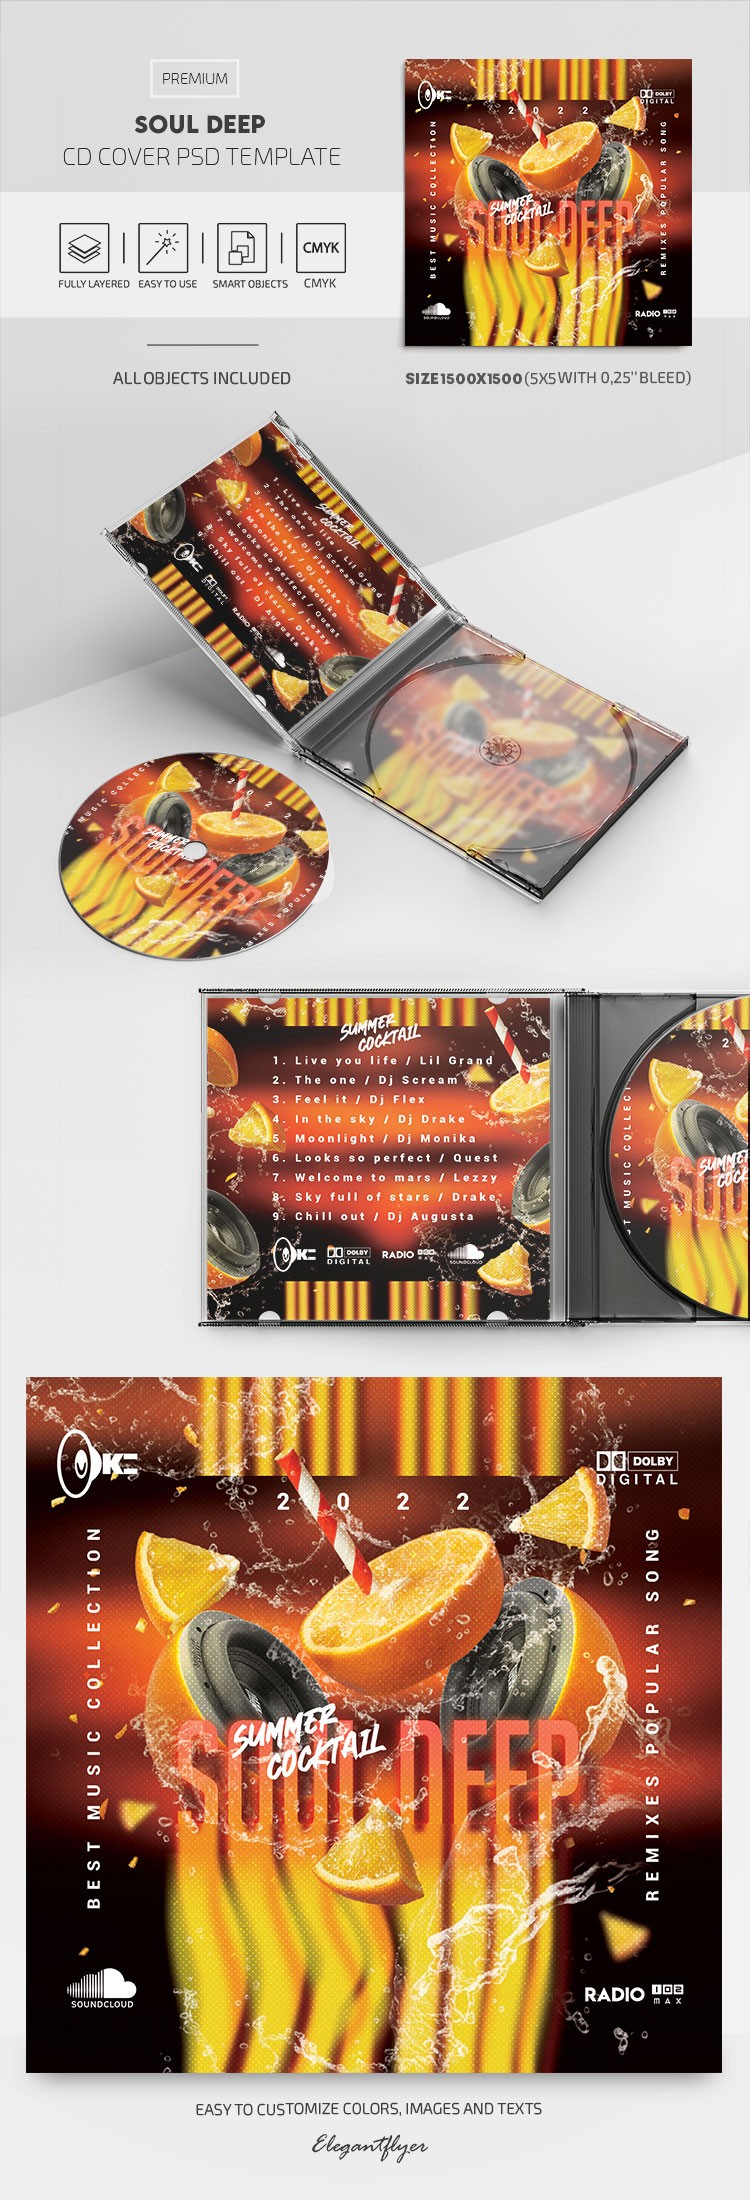 Couverture du CD Soul Deep. by ElegantFlyer